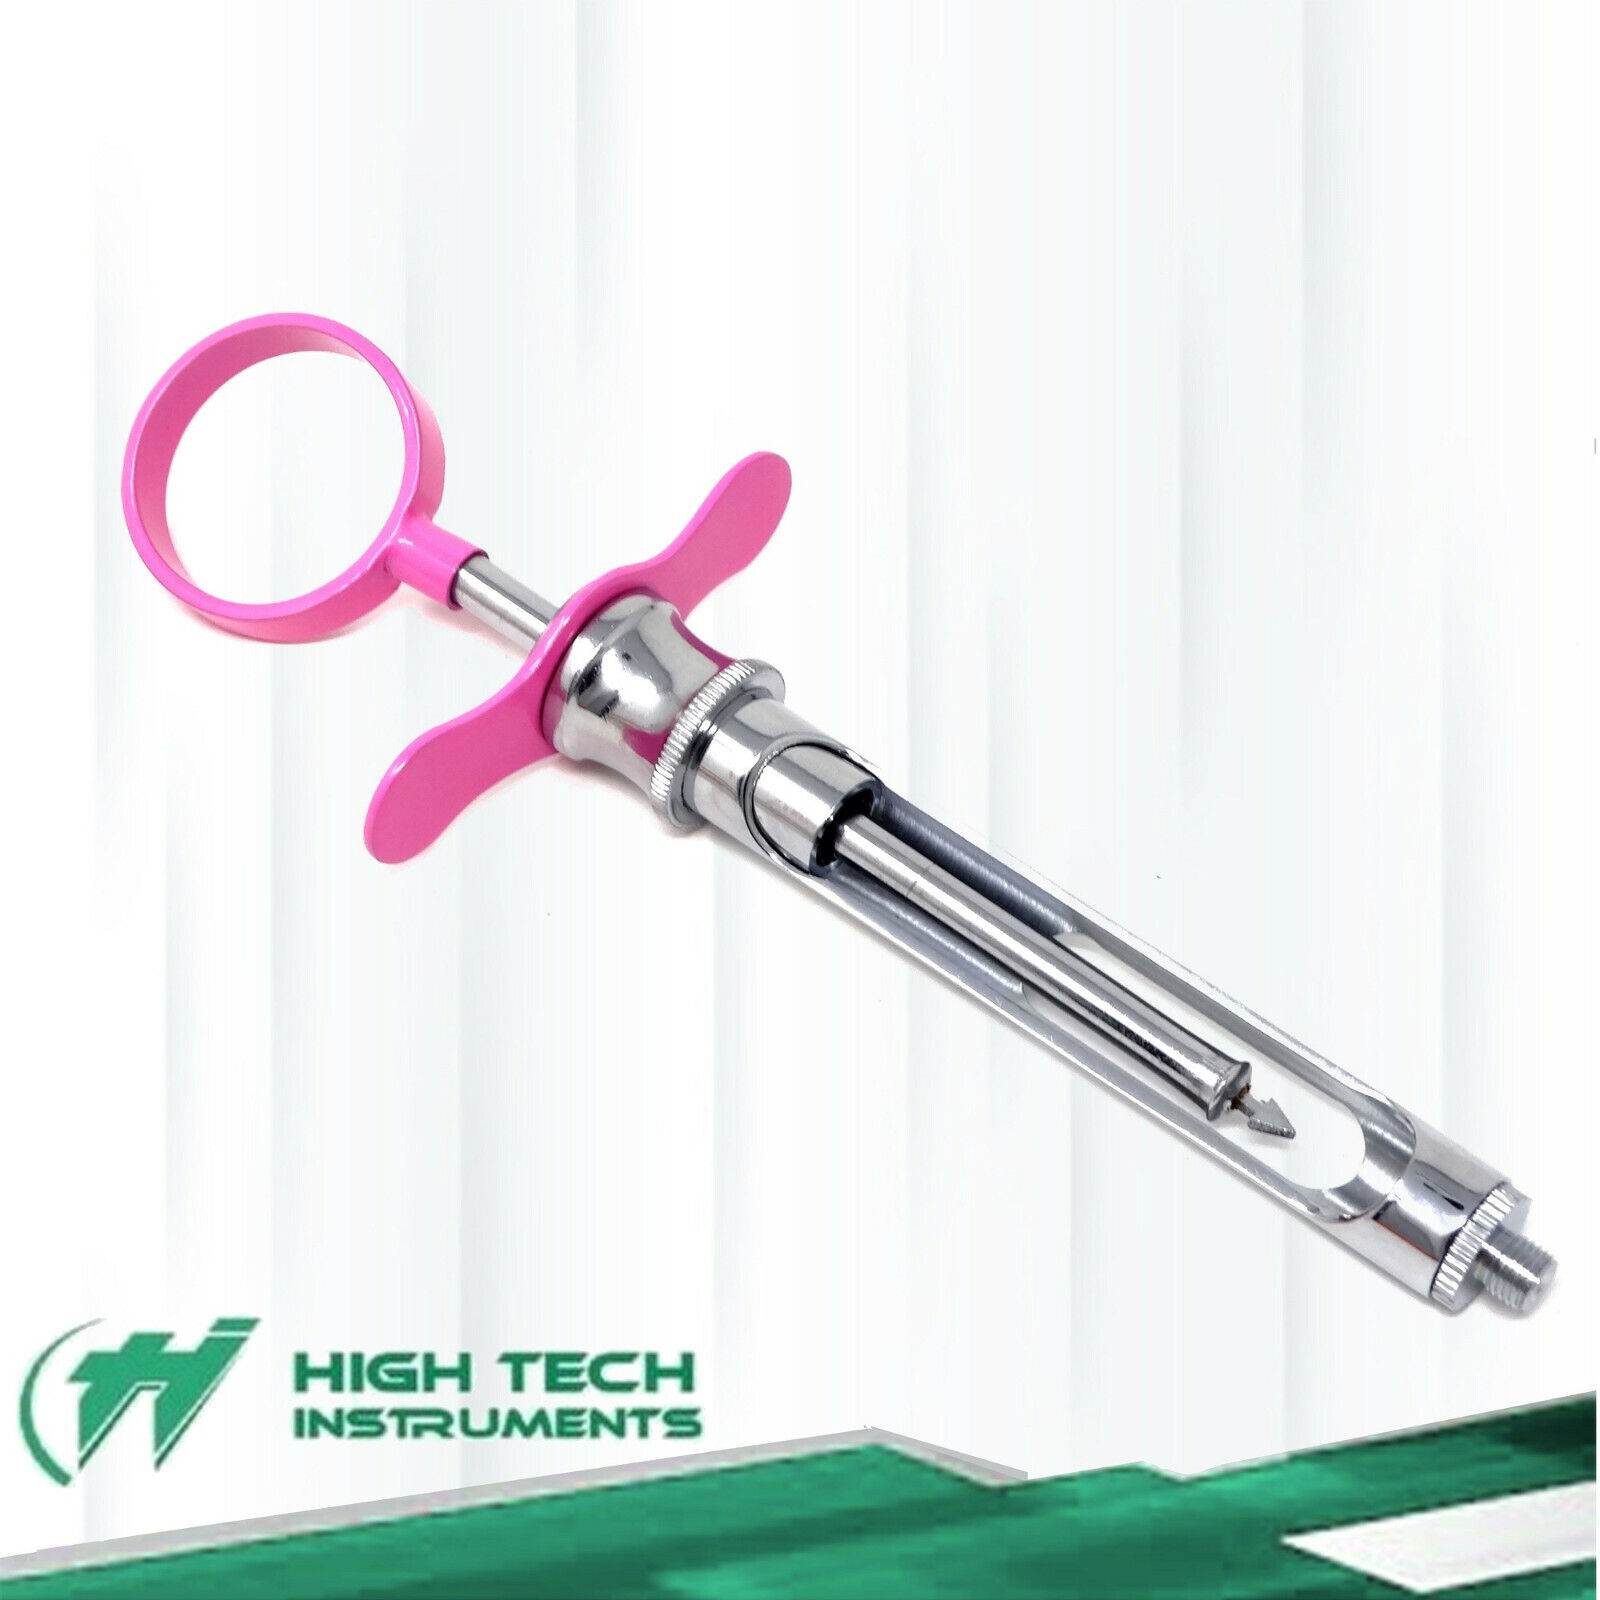 6 Premium Dental Anesthetic Syringe Self-Aspirating 1.8CC-Dental Instruments-A++ HIGH TECH INSTRUMENTS Does Not Apply - фотография #3